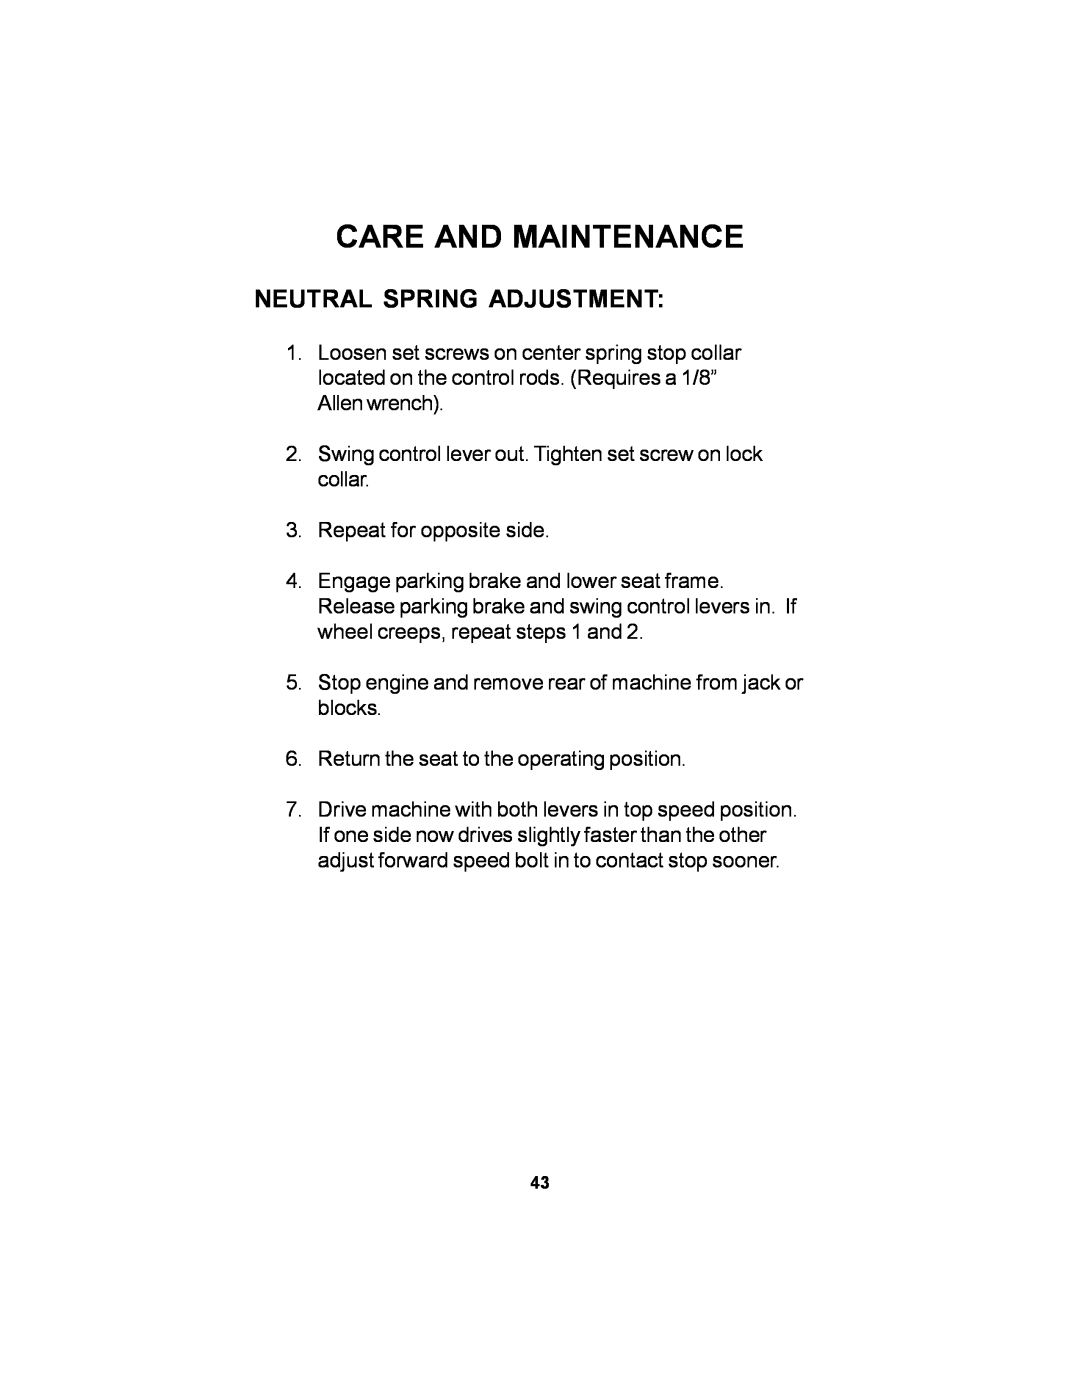 Dixon ELS 60 manual Neutral Spring Adjustment, Care And Maintenance 